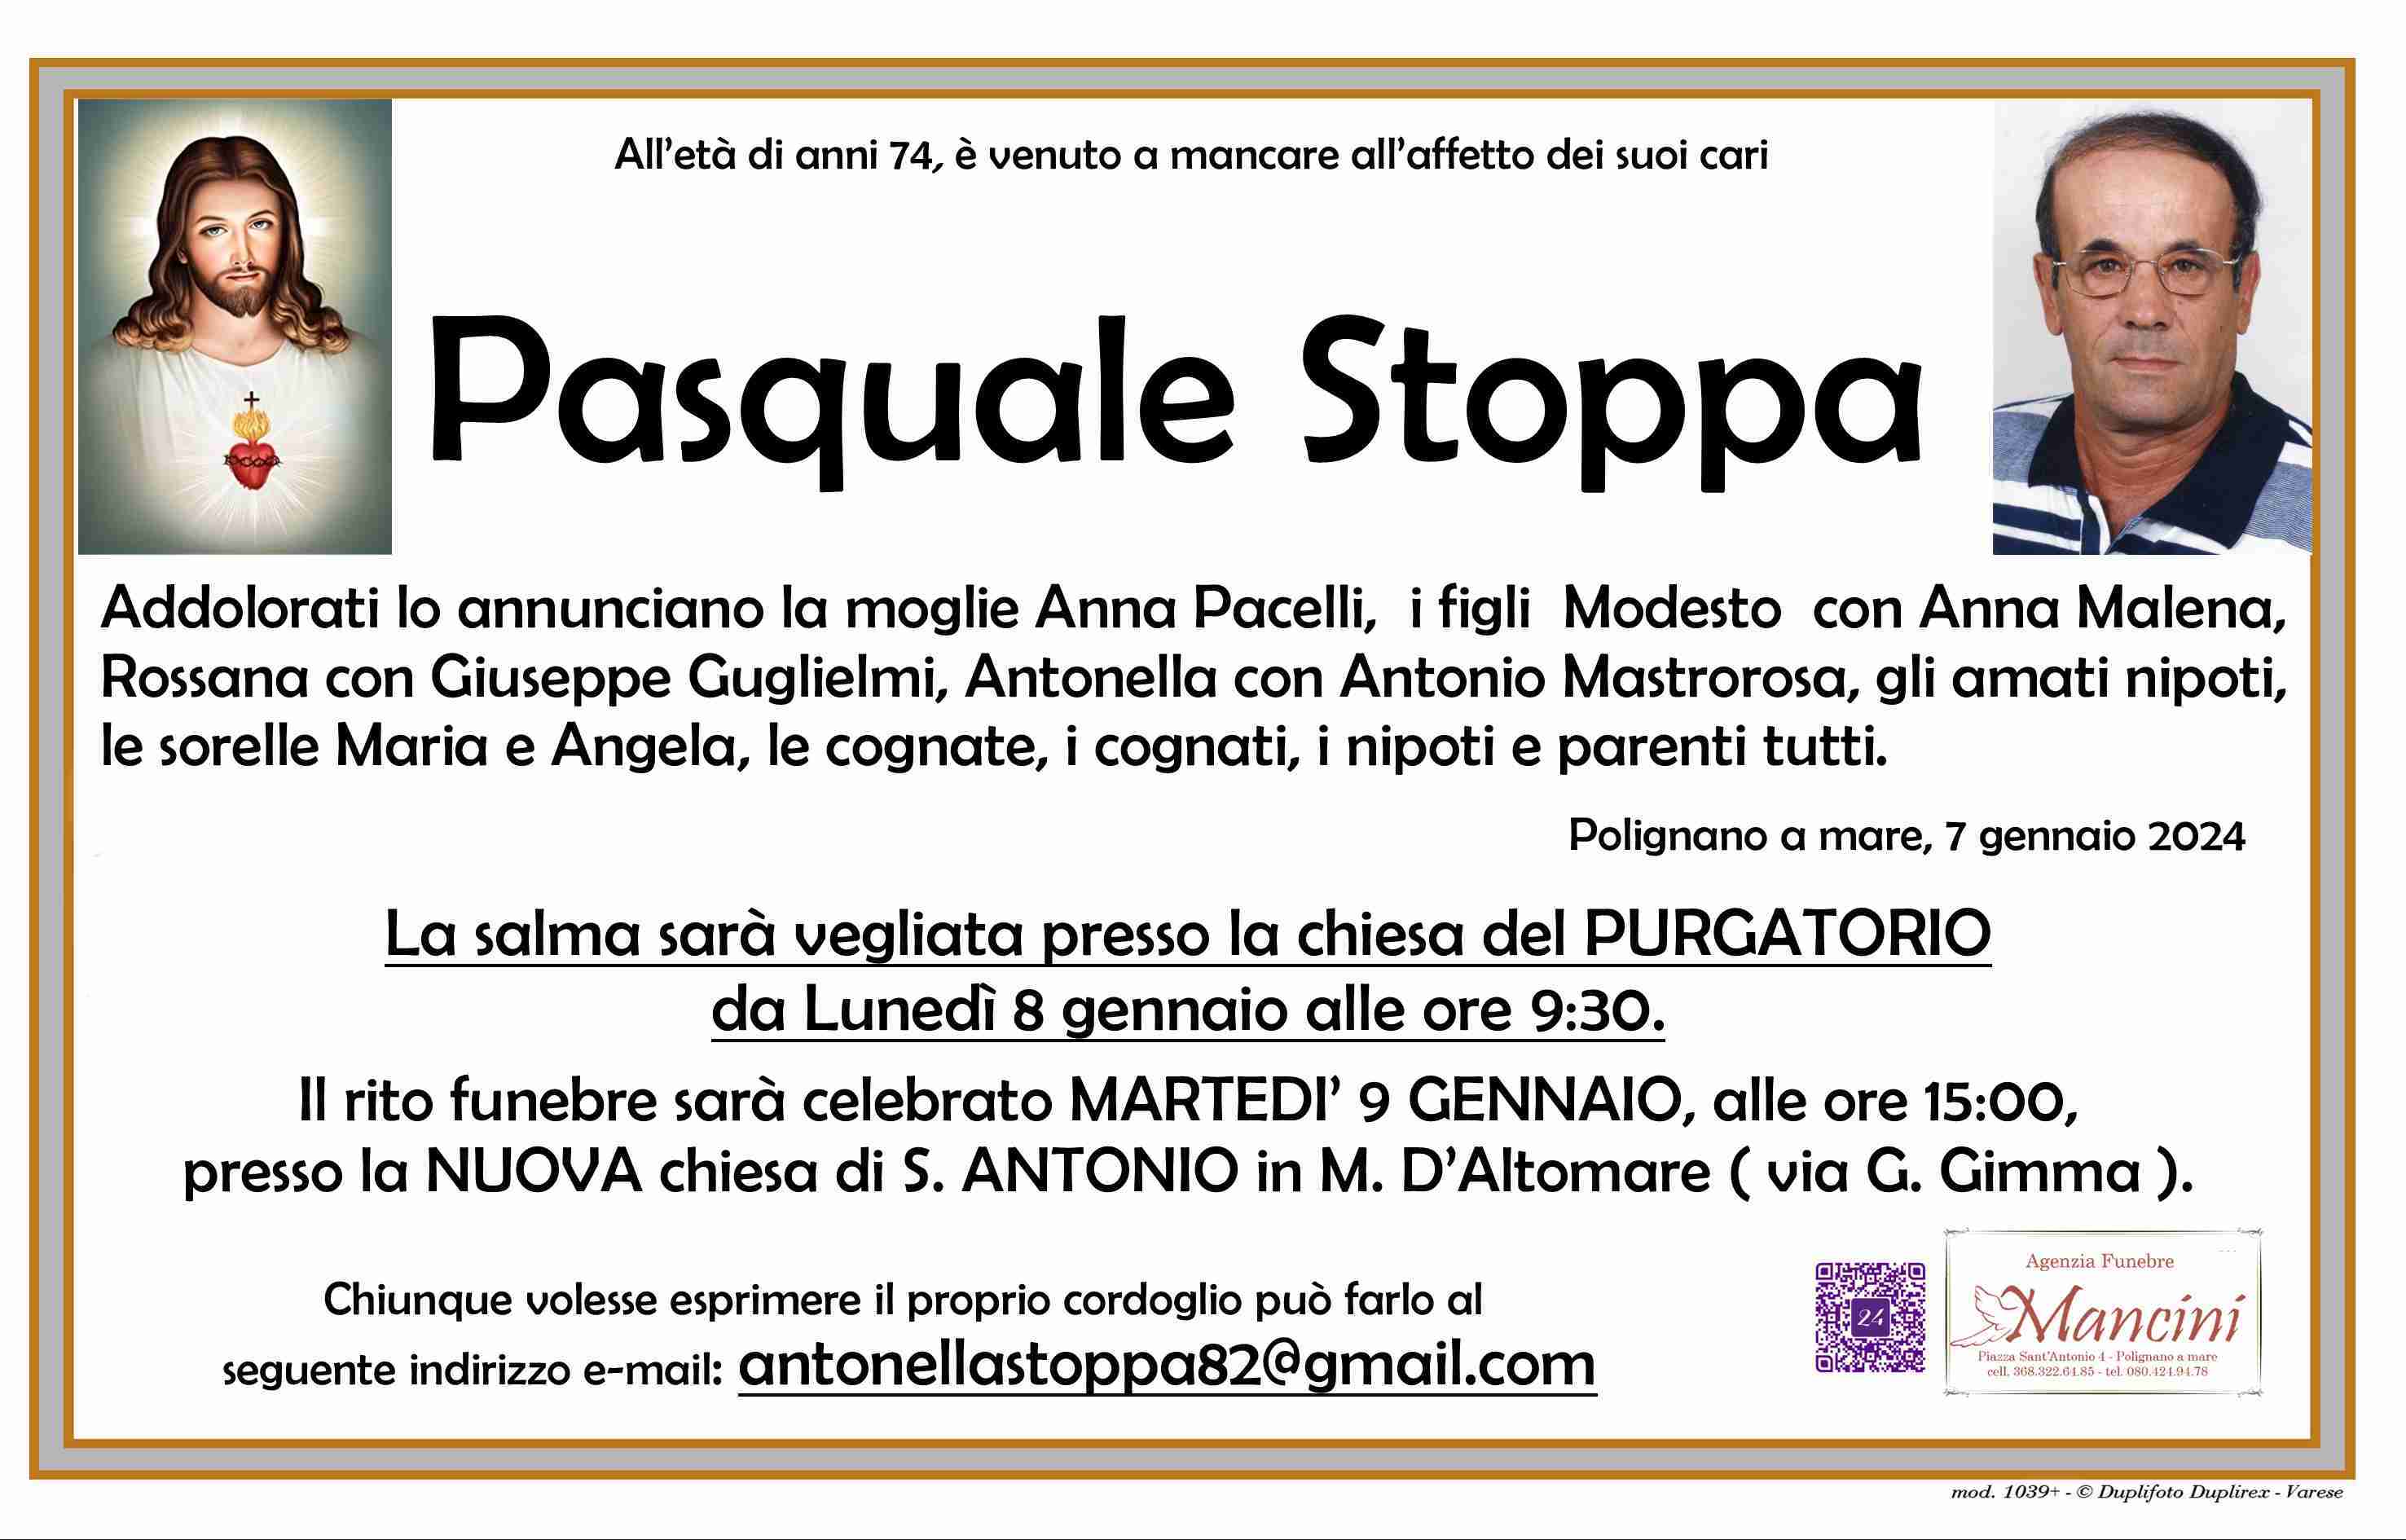 Pasquale Stoppa